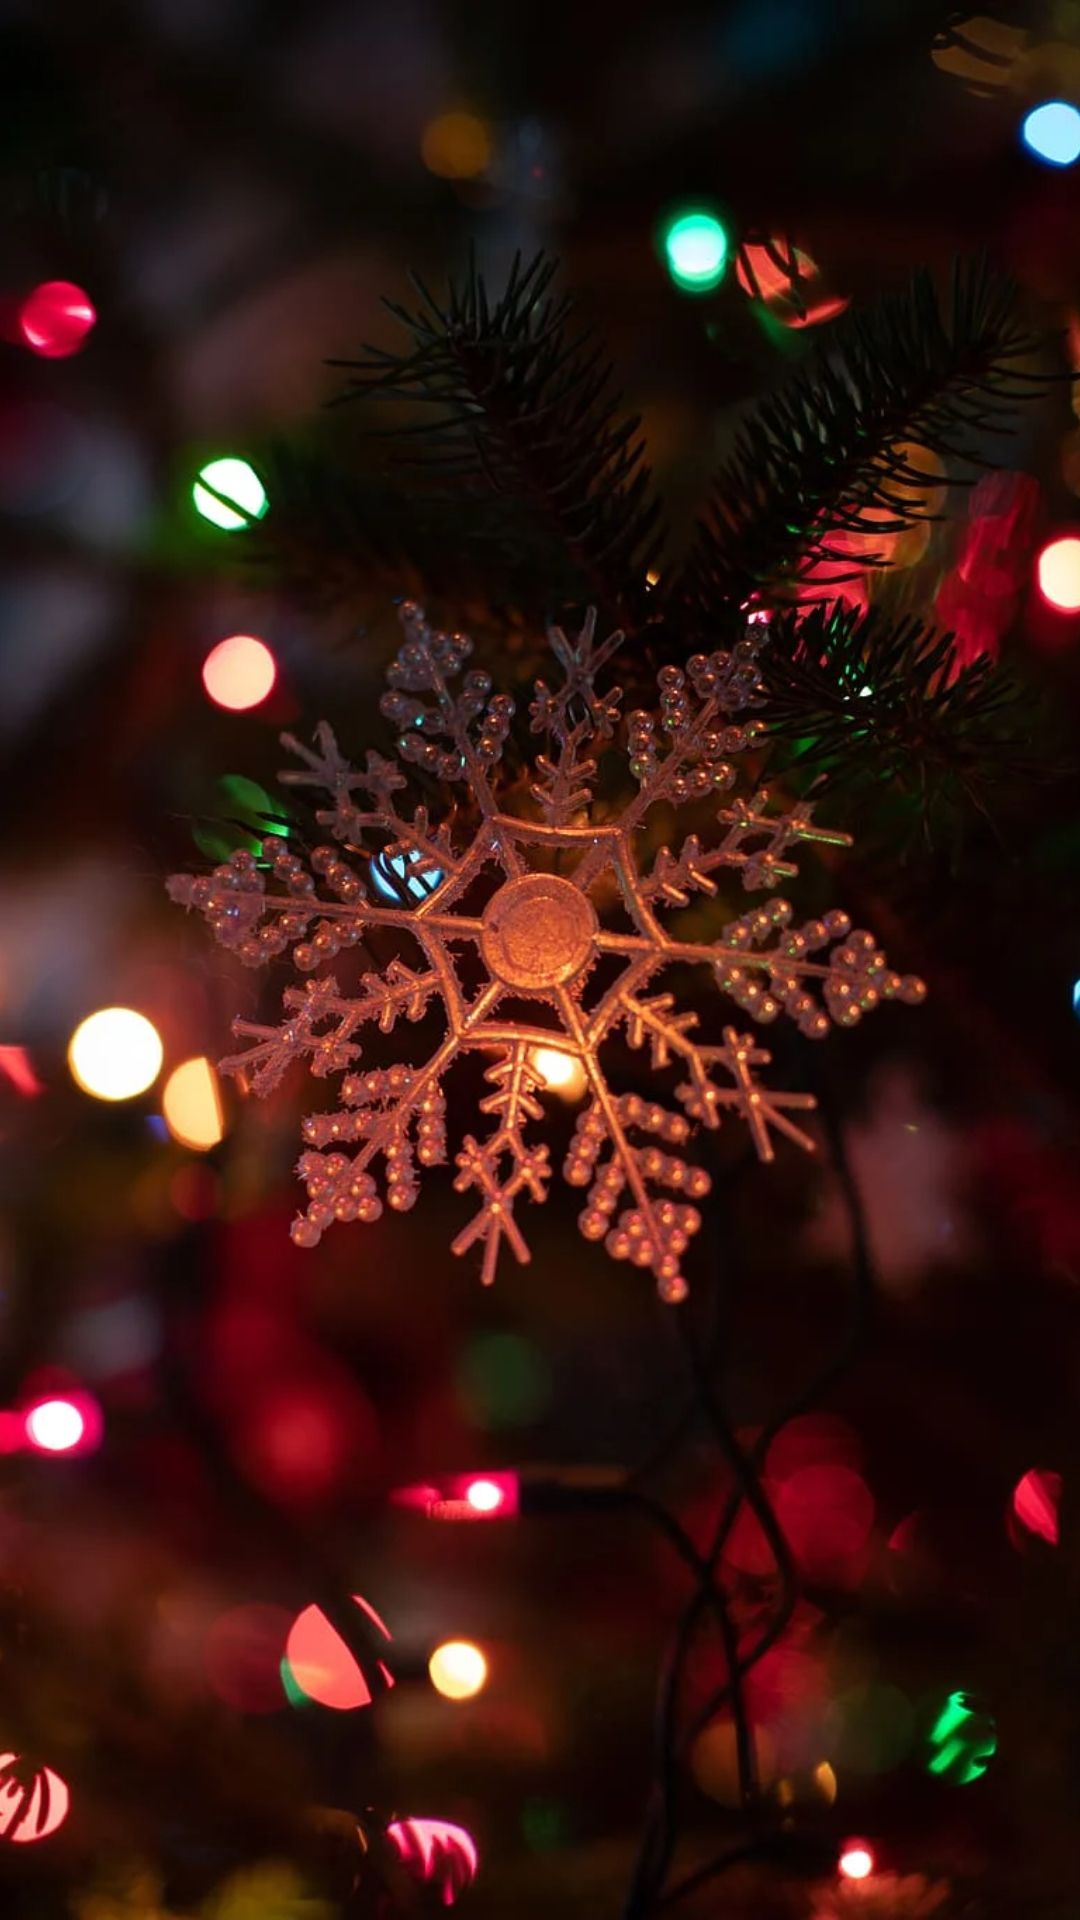 A close up of a snowflake ornament on a Christmas tree. - Christmas lights